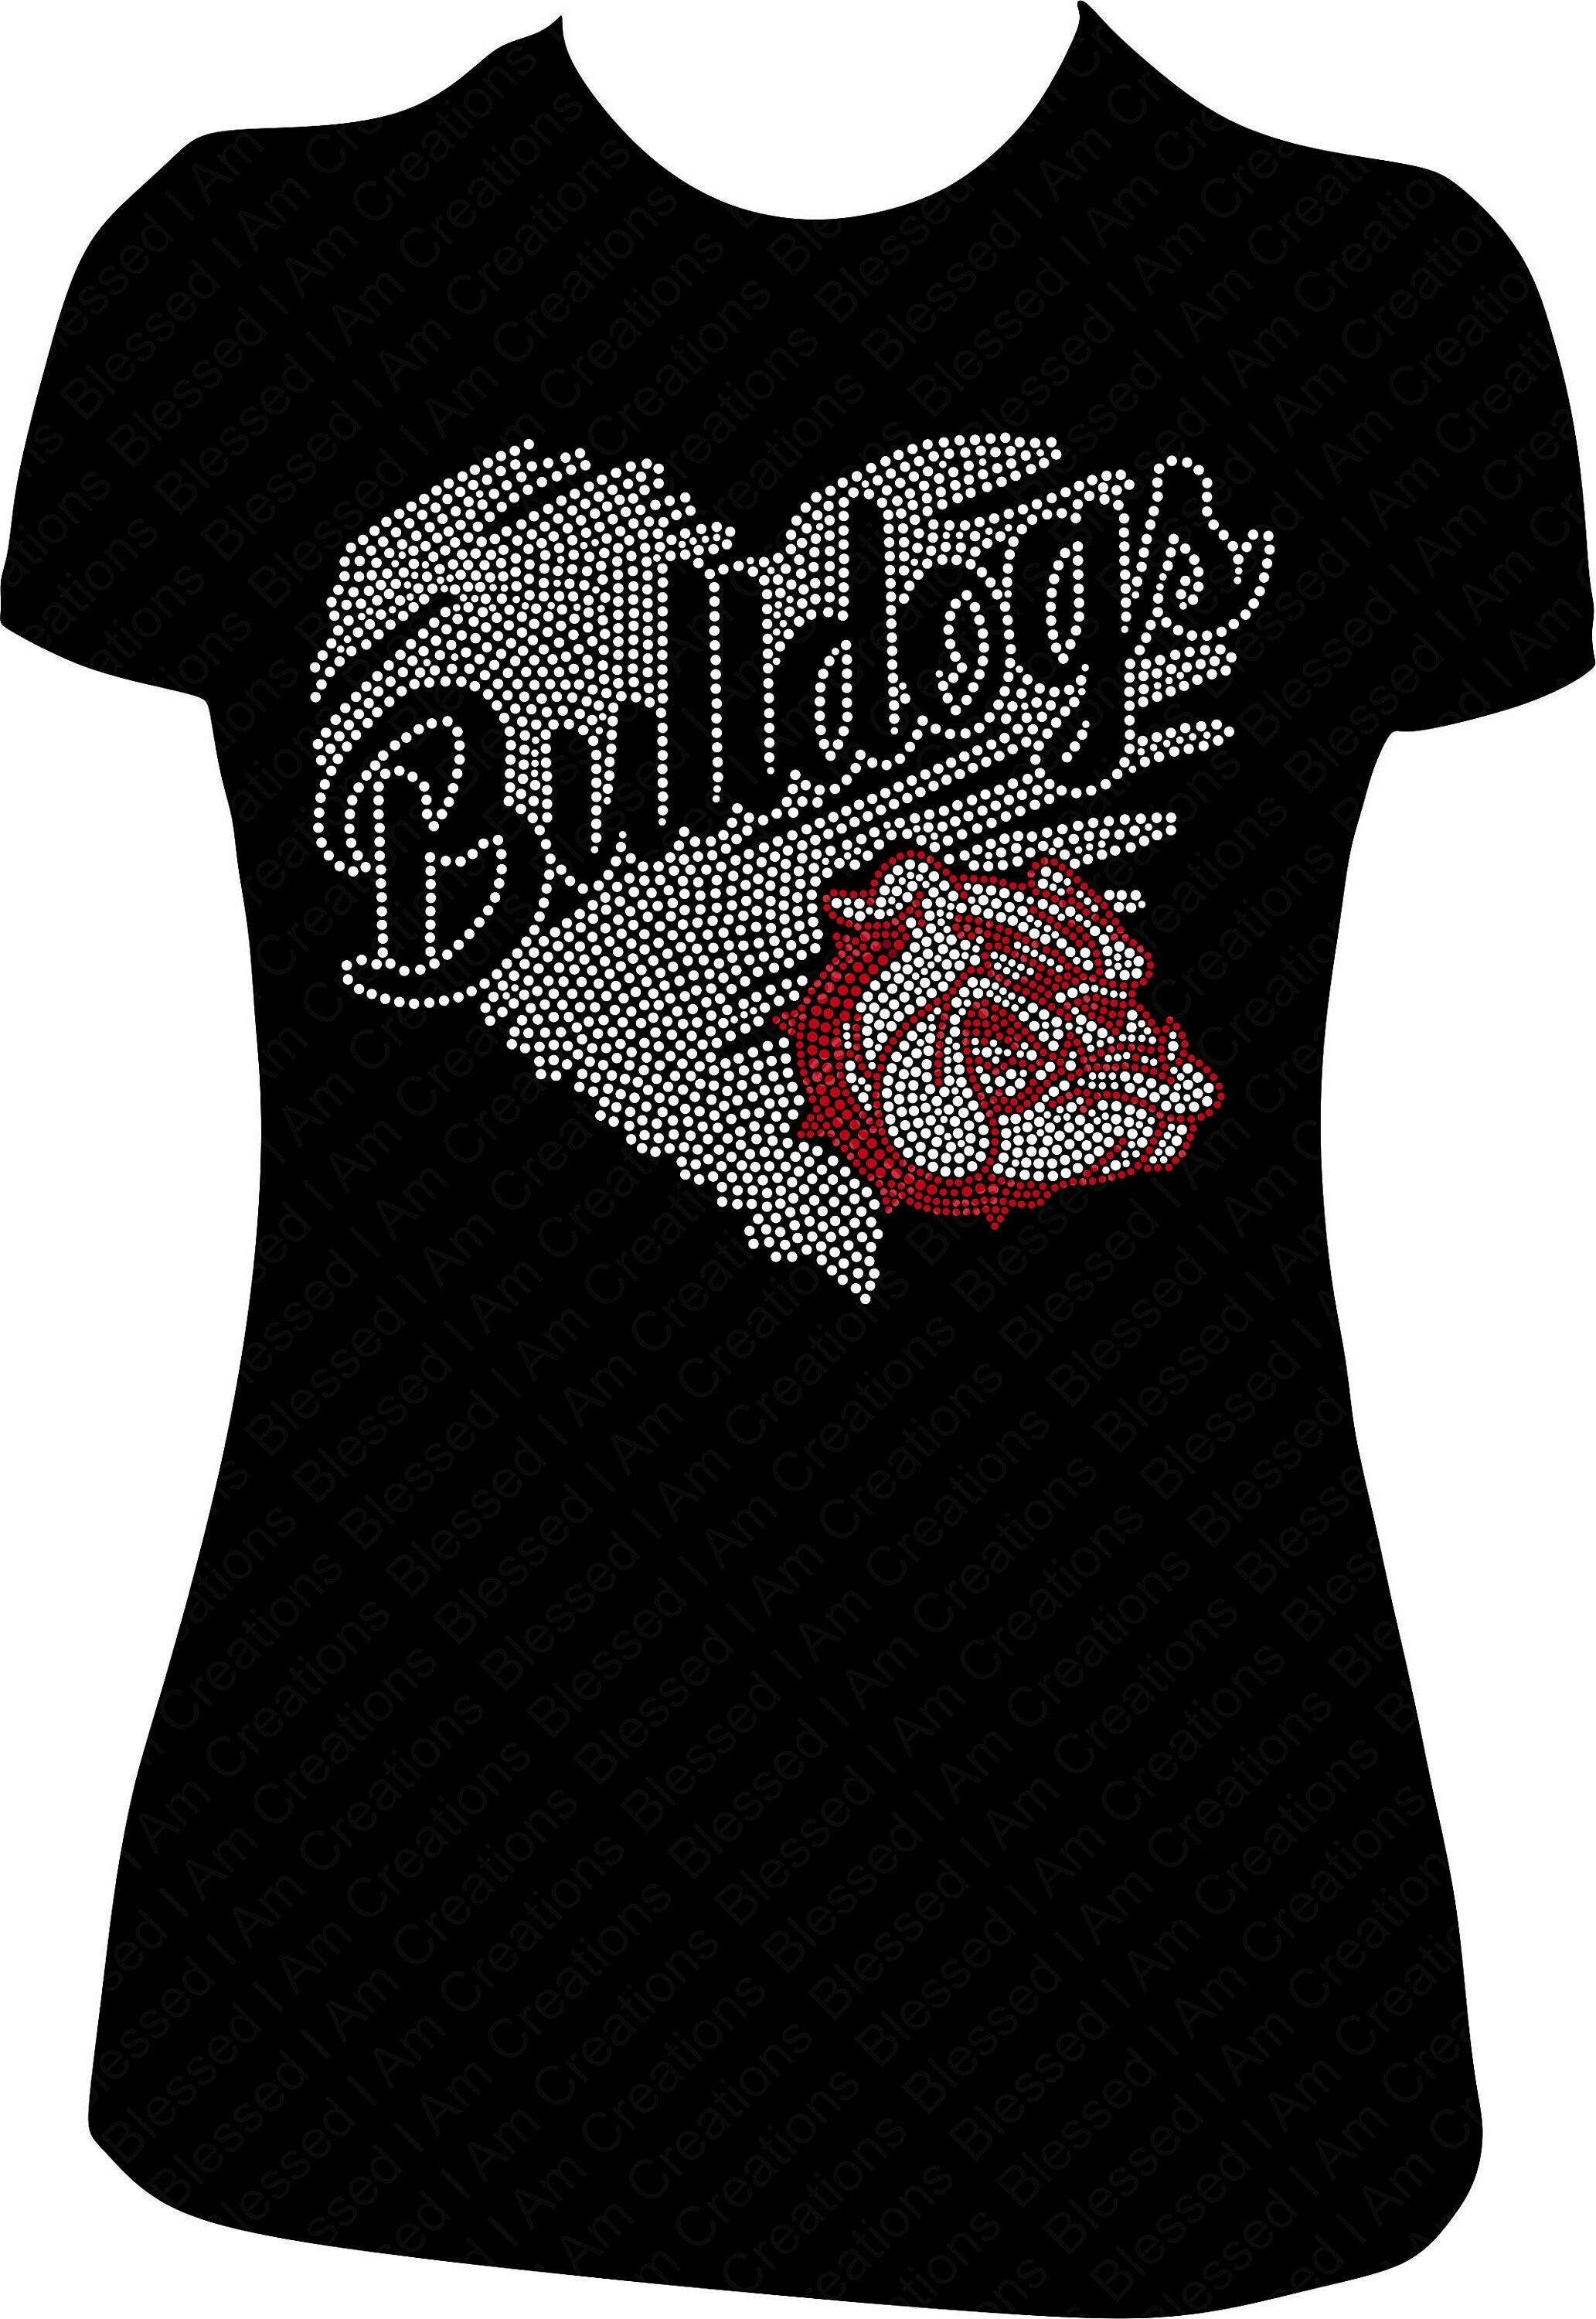 Bulldogs Braves Georgia Football Championship Shirt - Teeholly